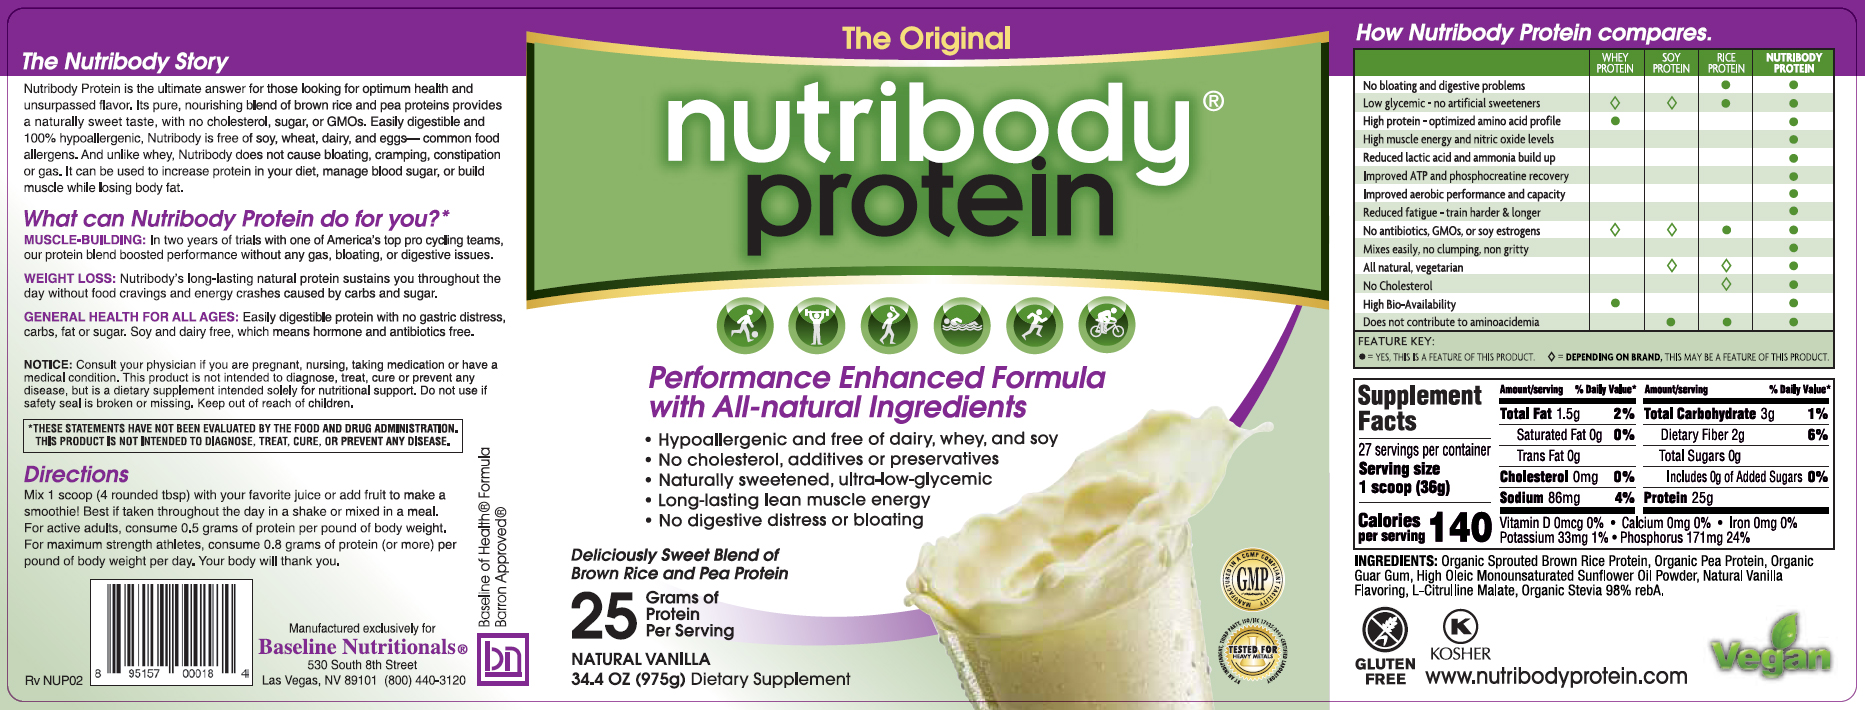 nutribody-protein